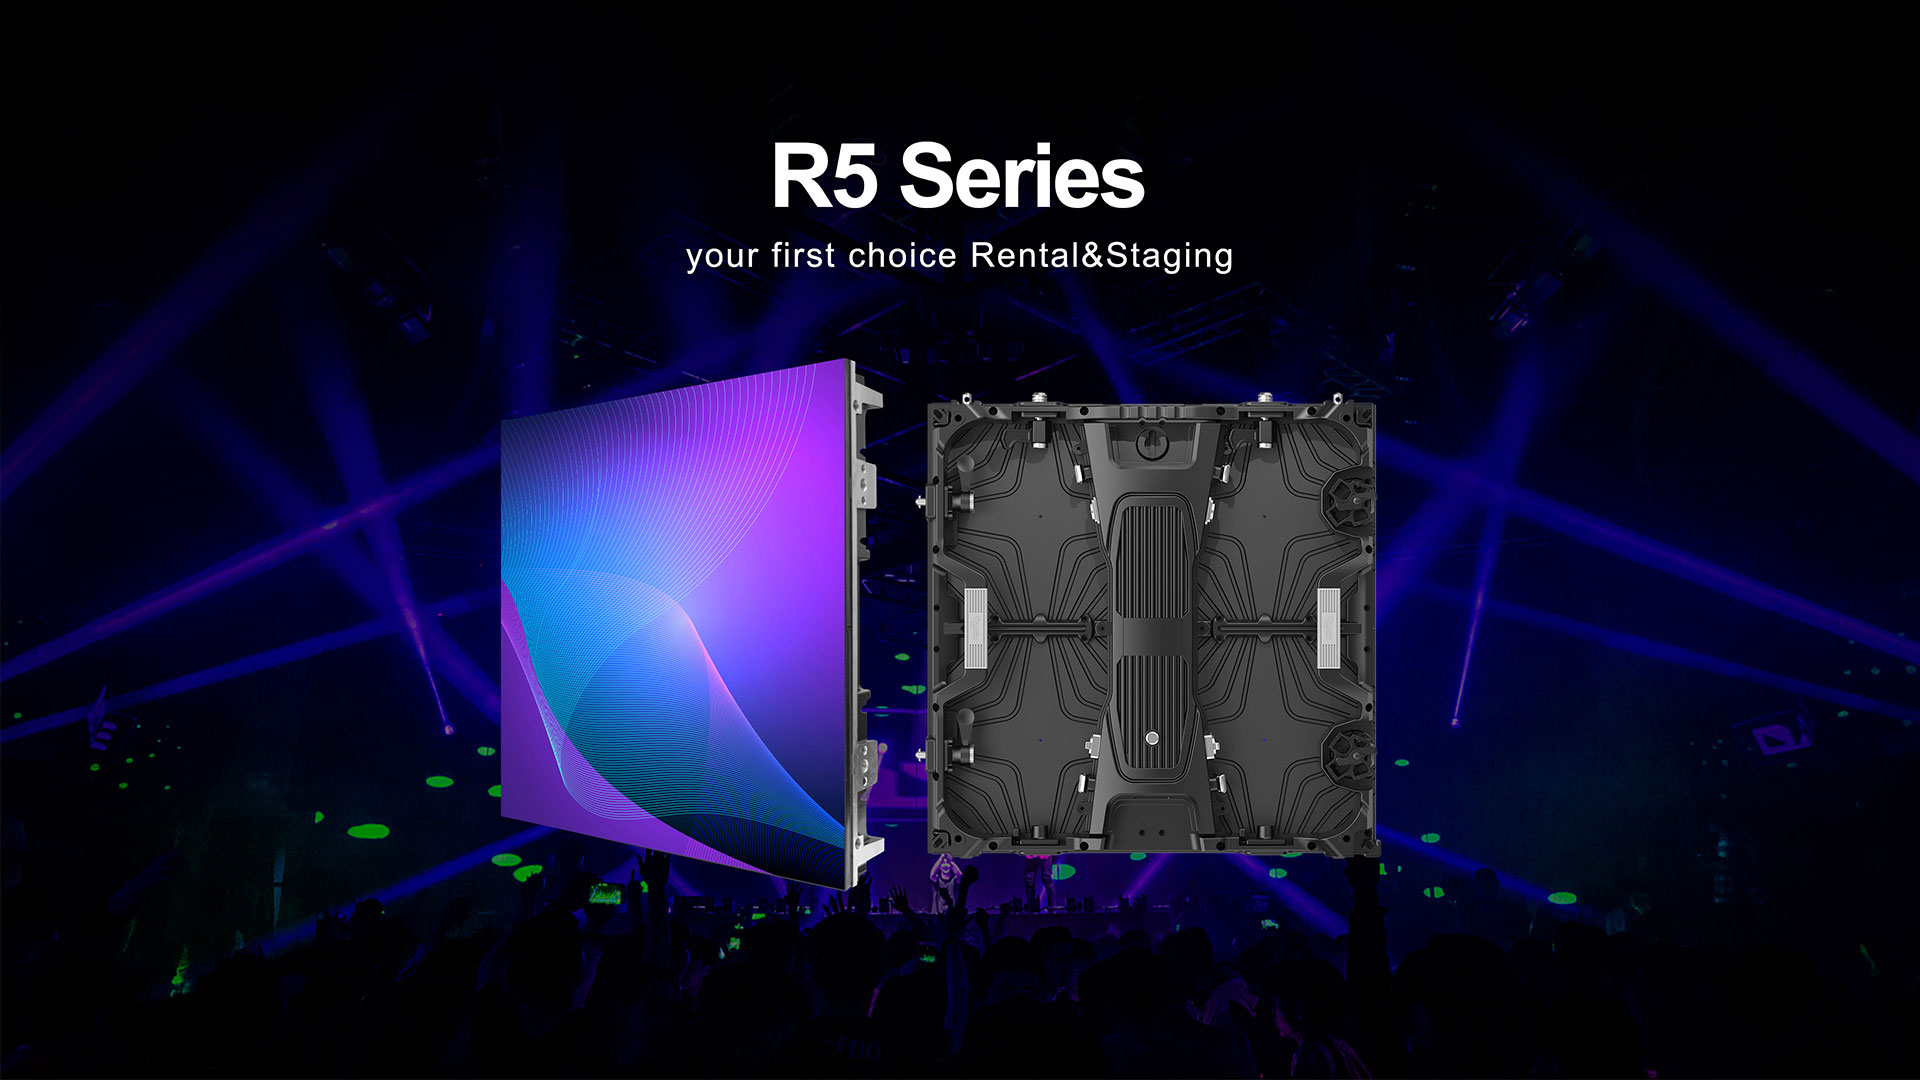 R5 series